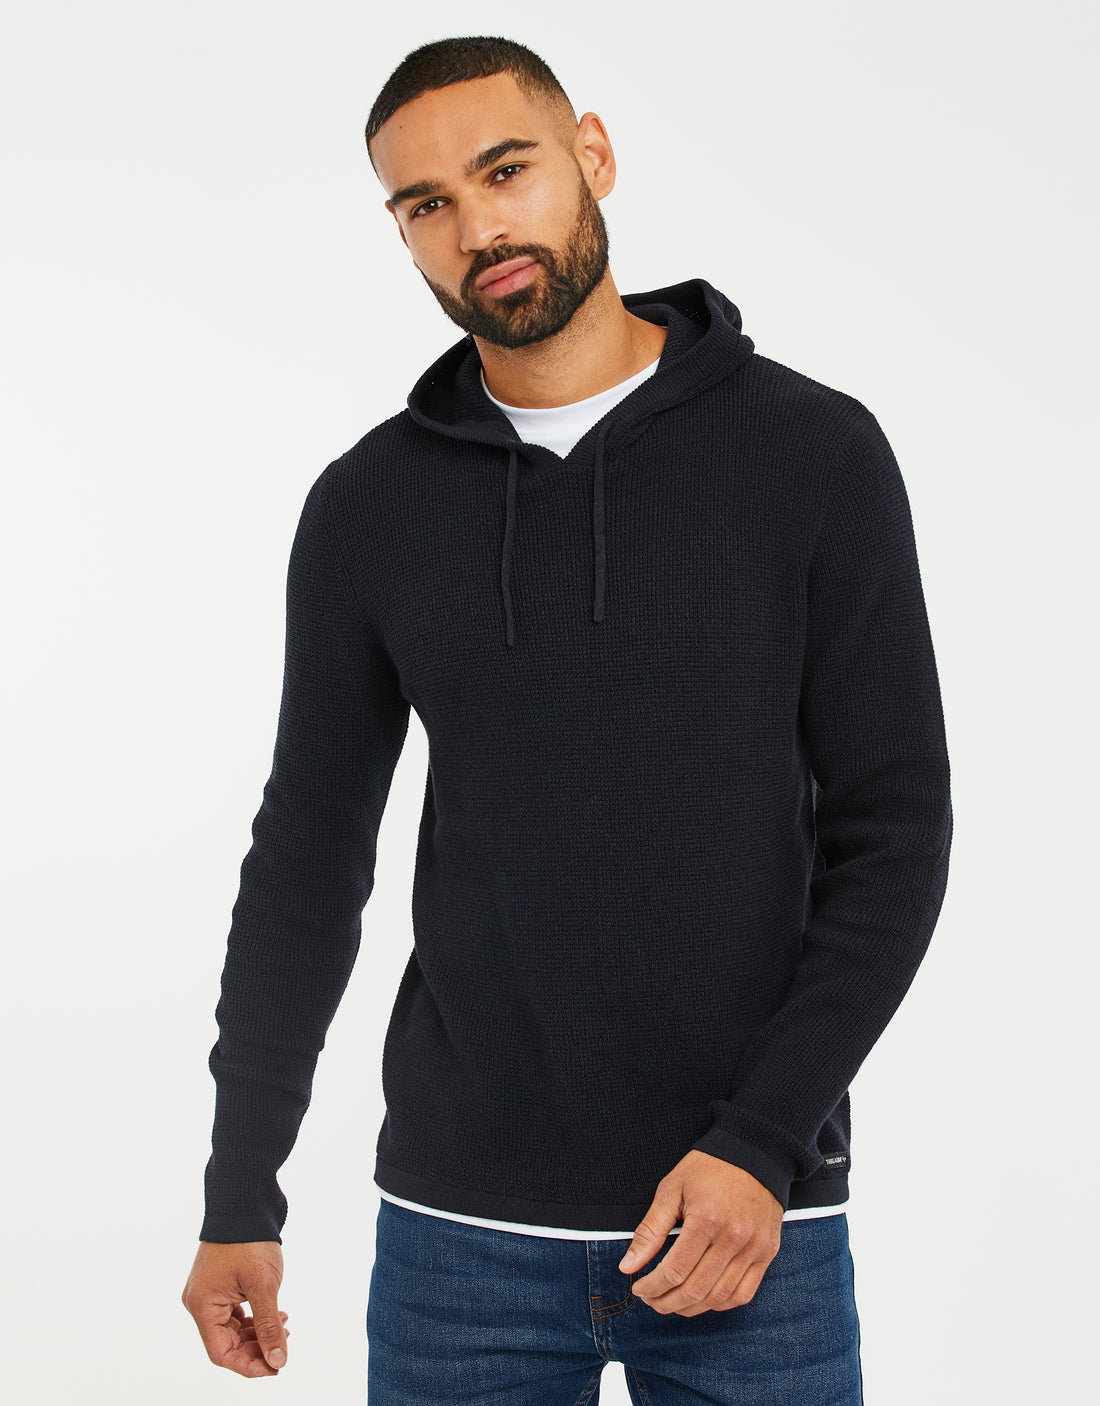 Men's Navy Blue & Black Twist Mock T-Shirt 12GG Knitted Pullover Hoodie ...